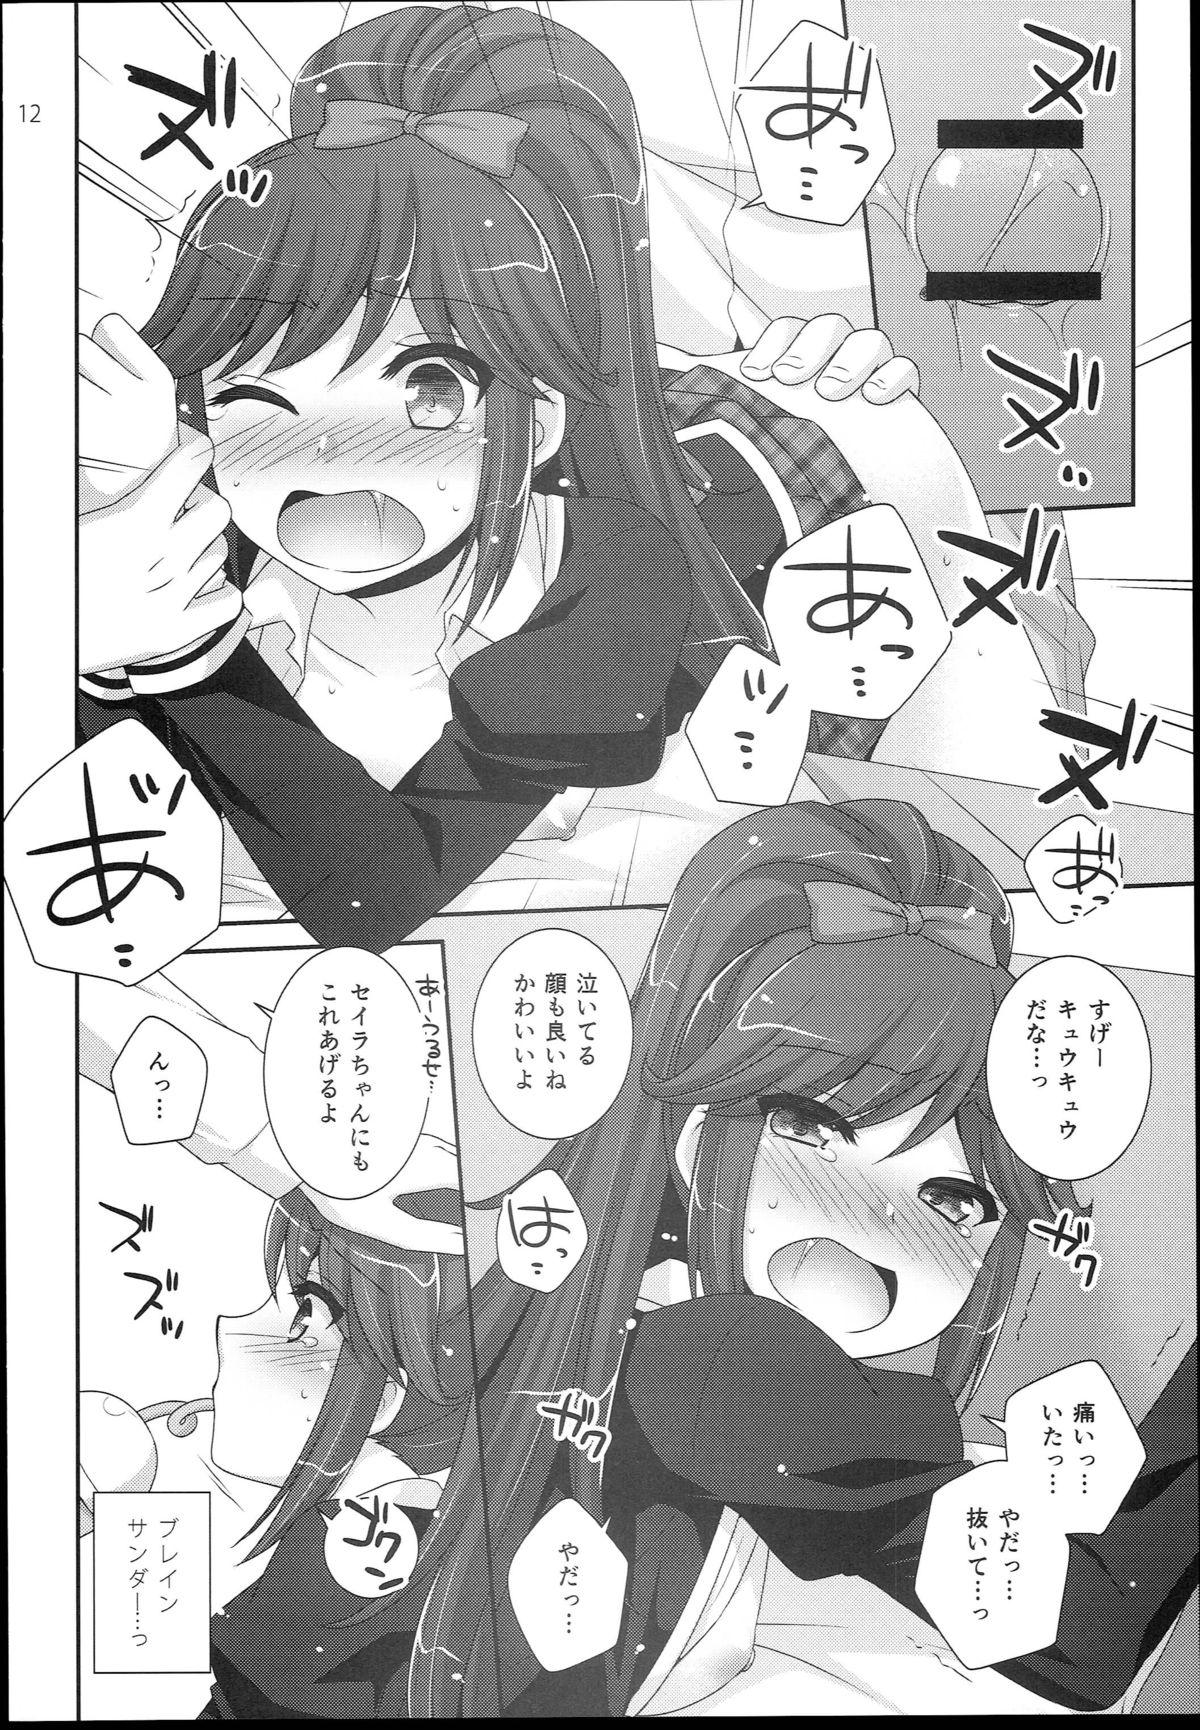 Porn sayAIsayKATSU! - Aikatsu Fishnet - Page 12